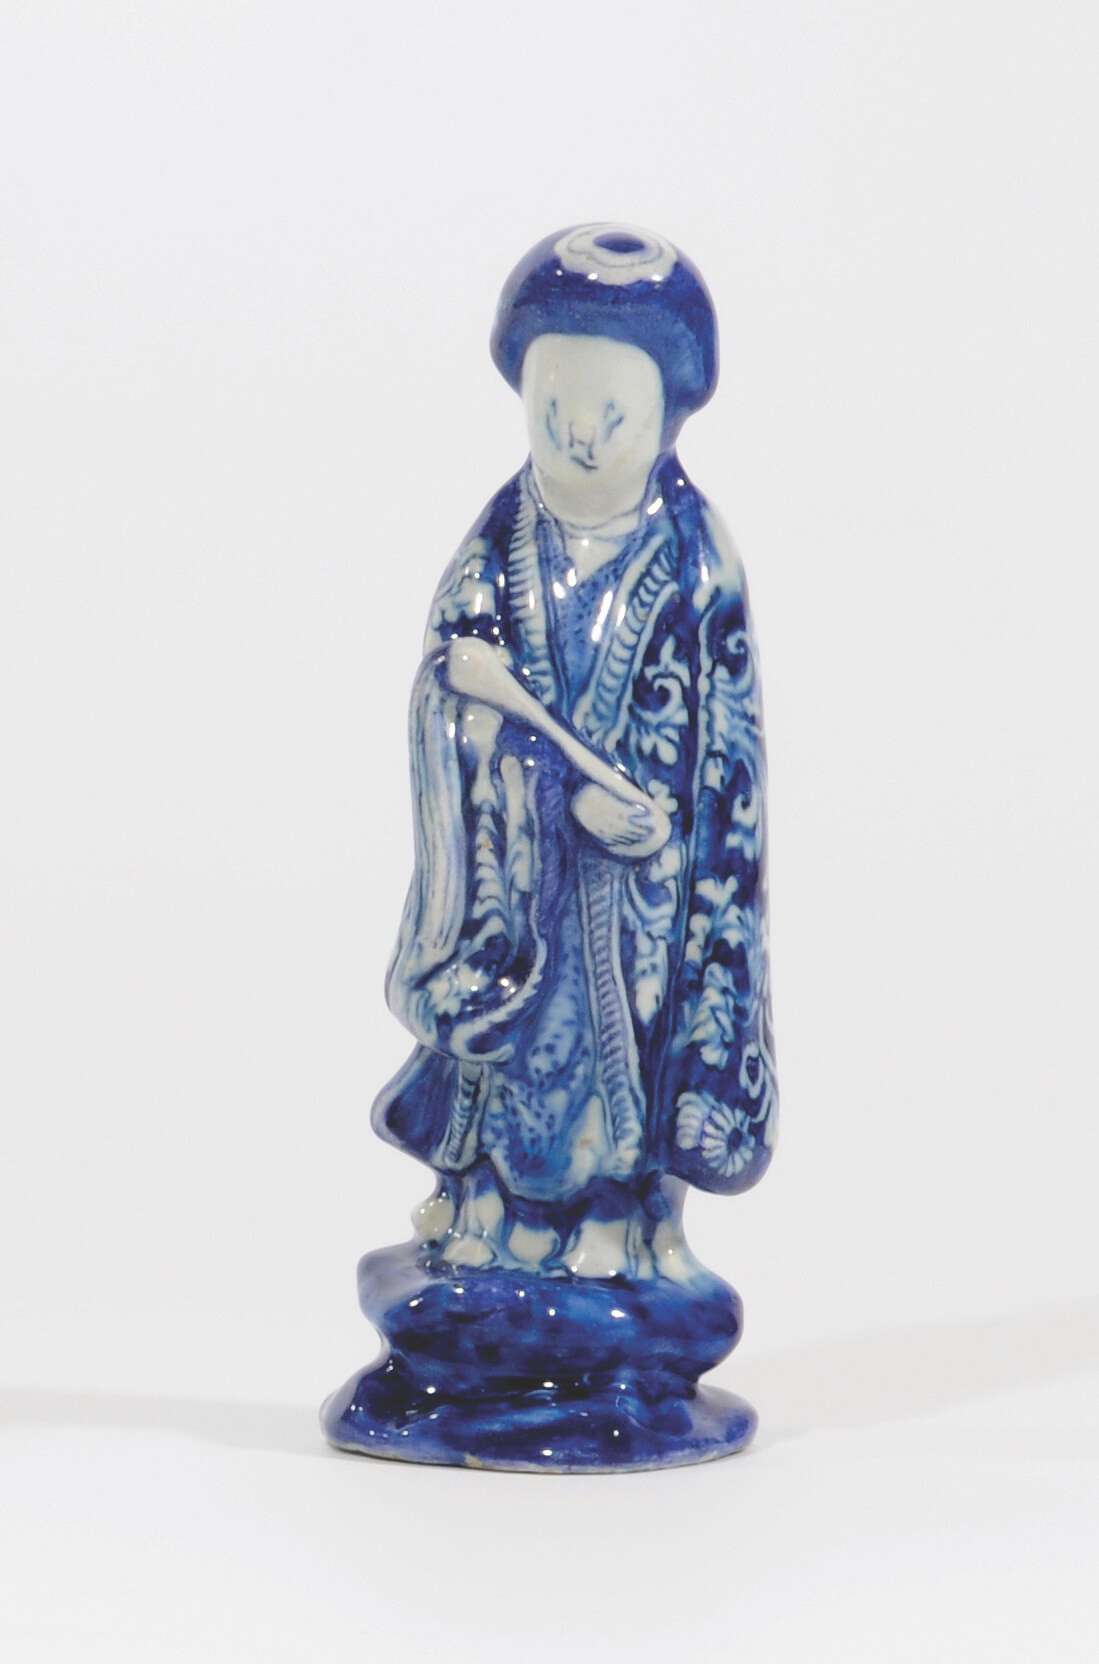 Chinoiserie figurine of oriental lady marken by Lambertus van Eenhoorn